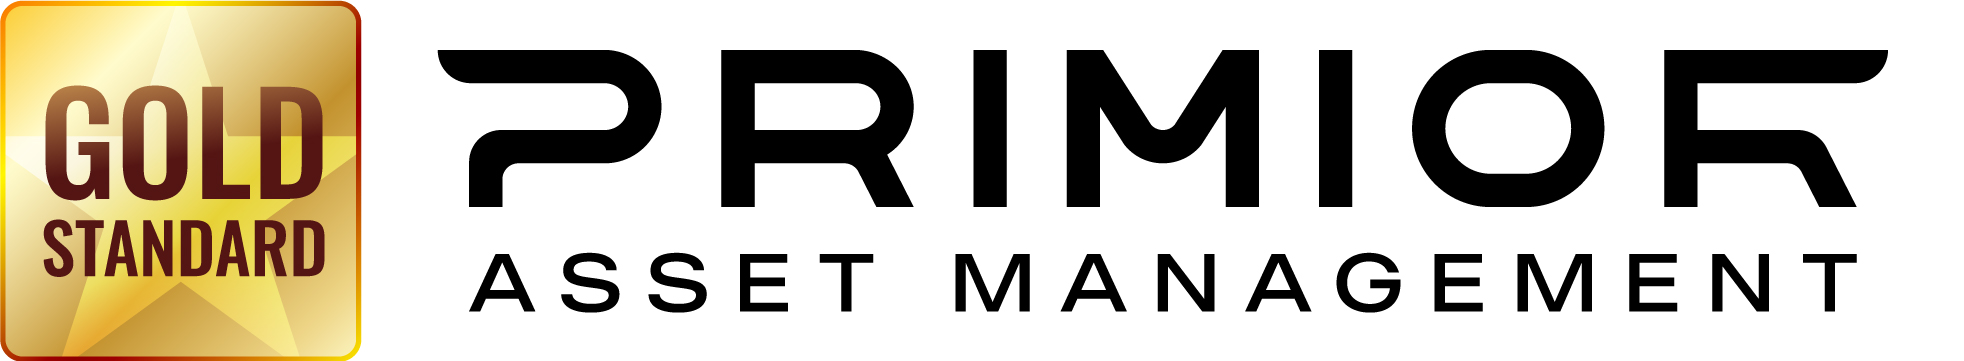 Primior Asset Management logo